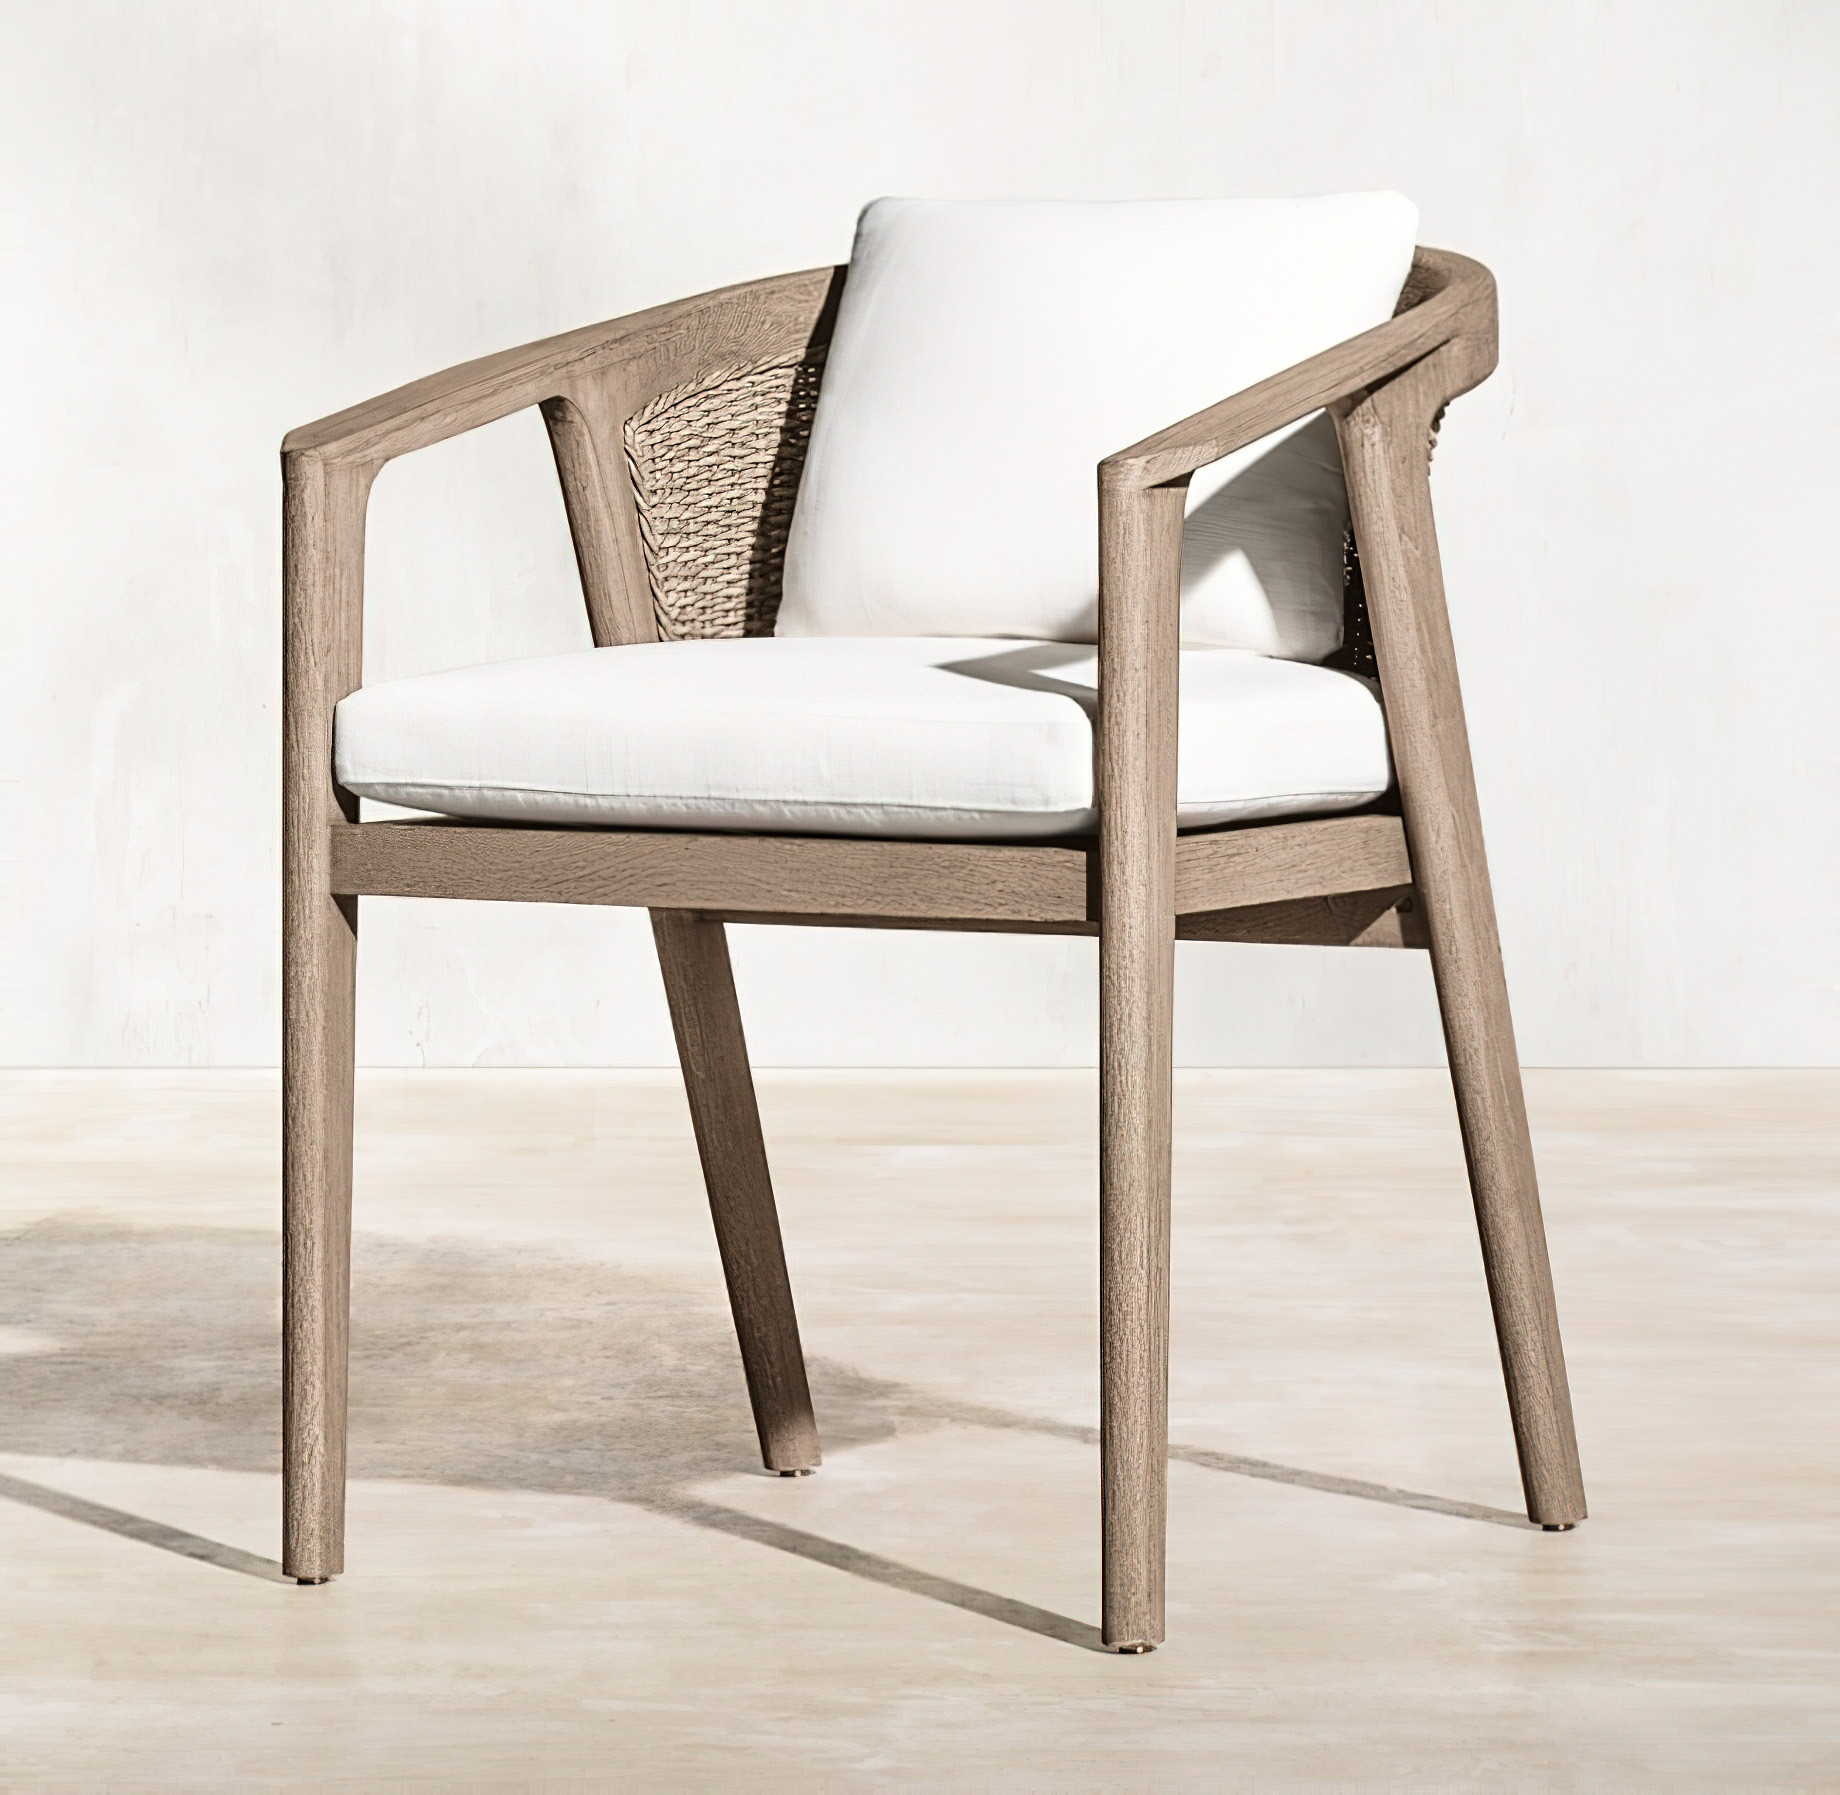 Malta Teak Collection Outdoor Furniture Design for RH – Ramon Esteve – Malta Teak Armchair